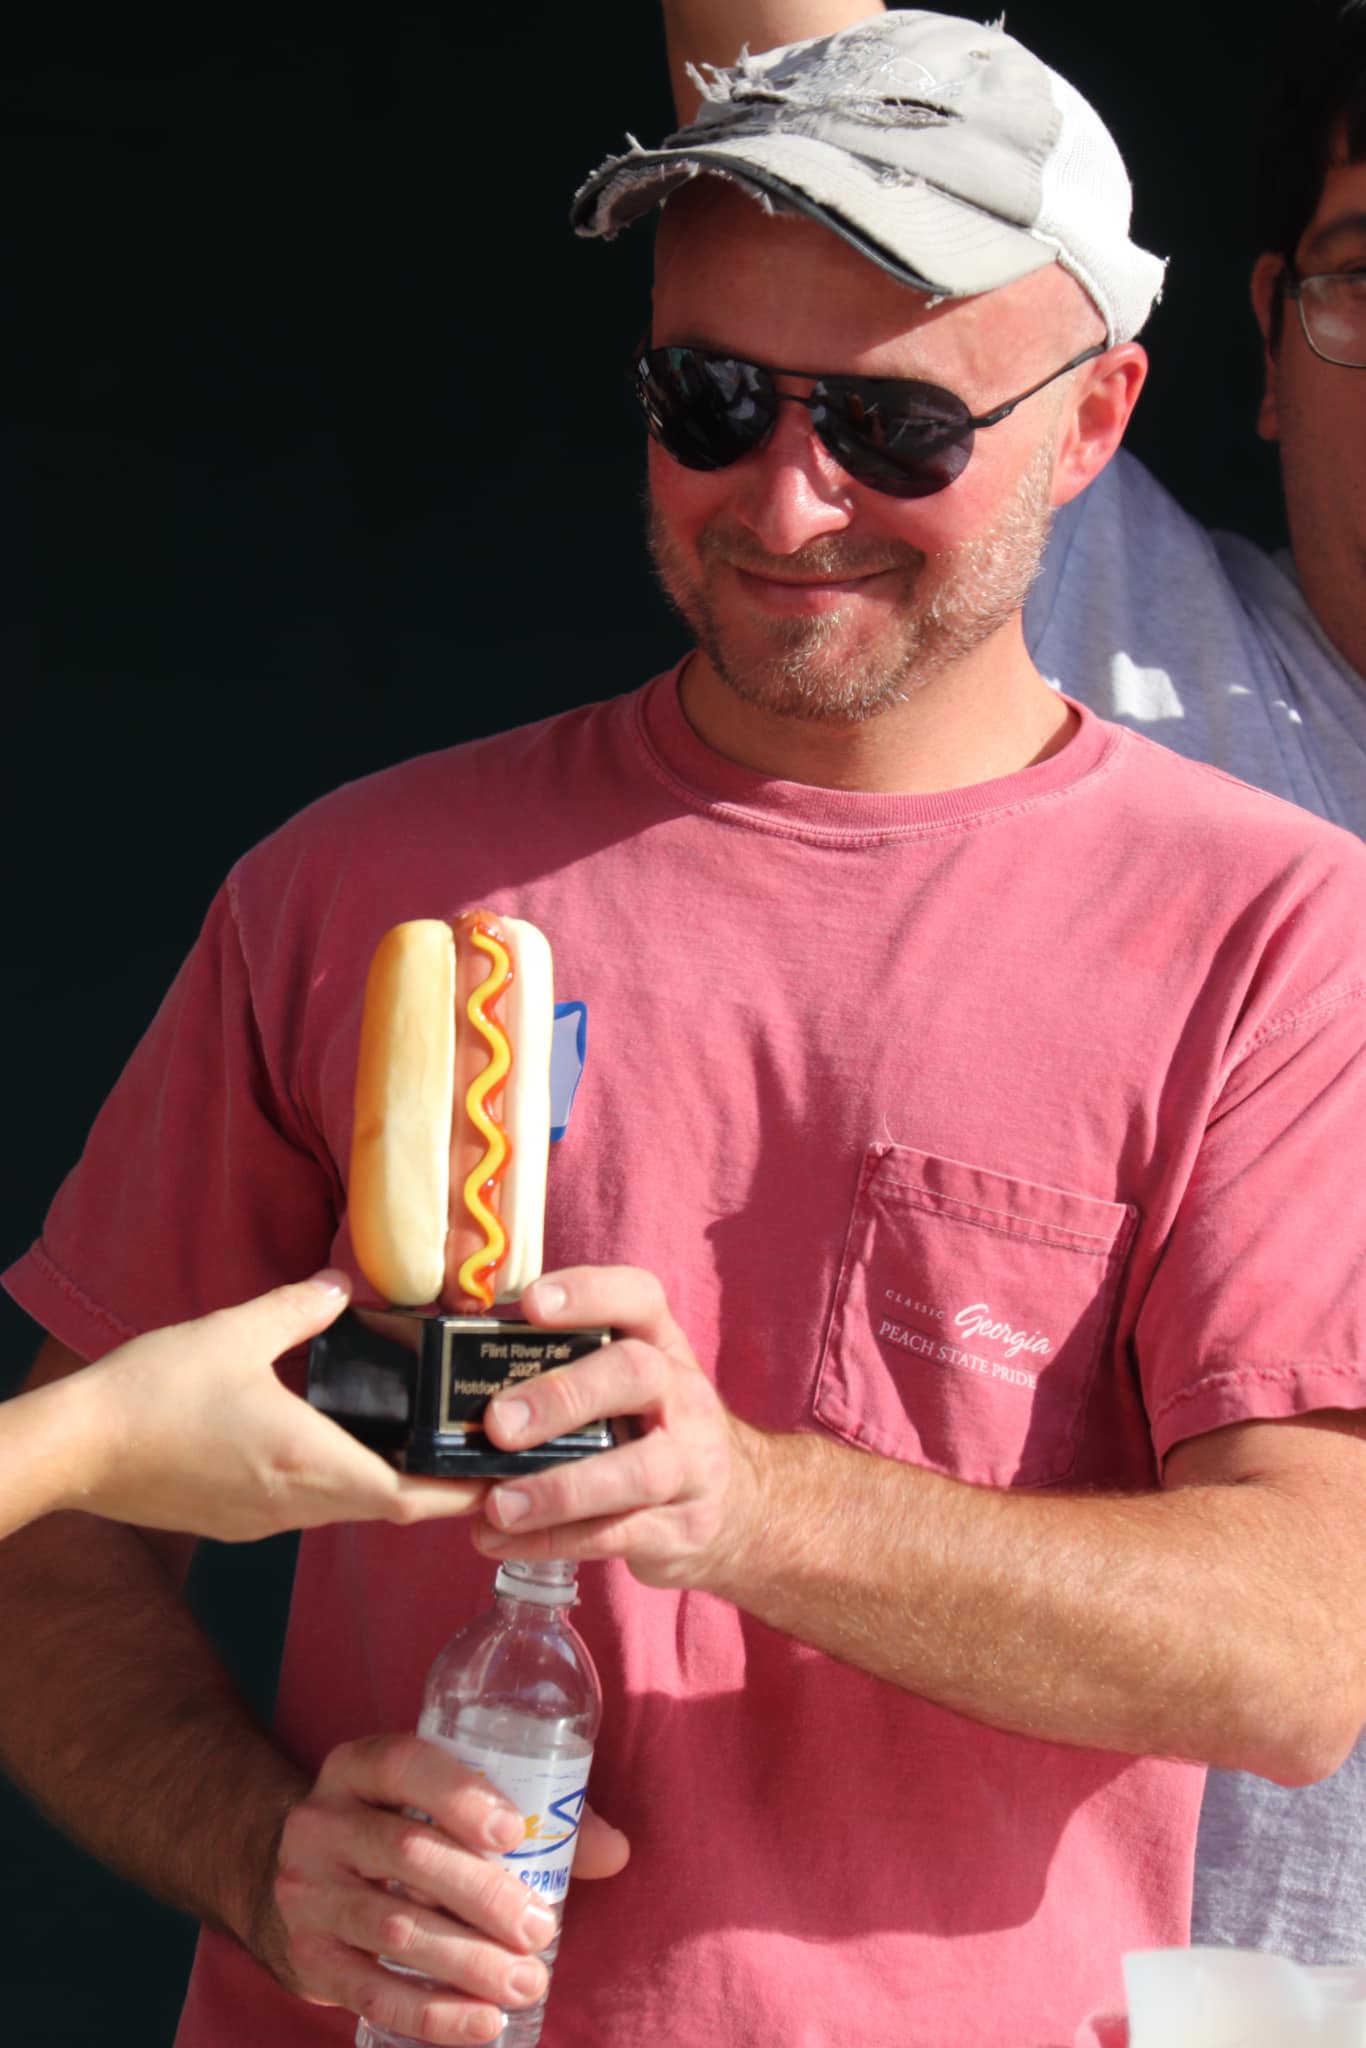 Photos: The Flint River Fair and Hot Dog Eating Contest